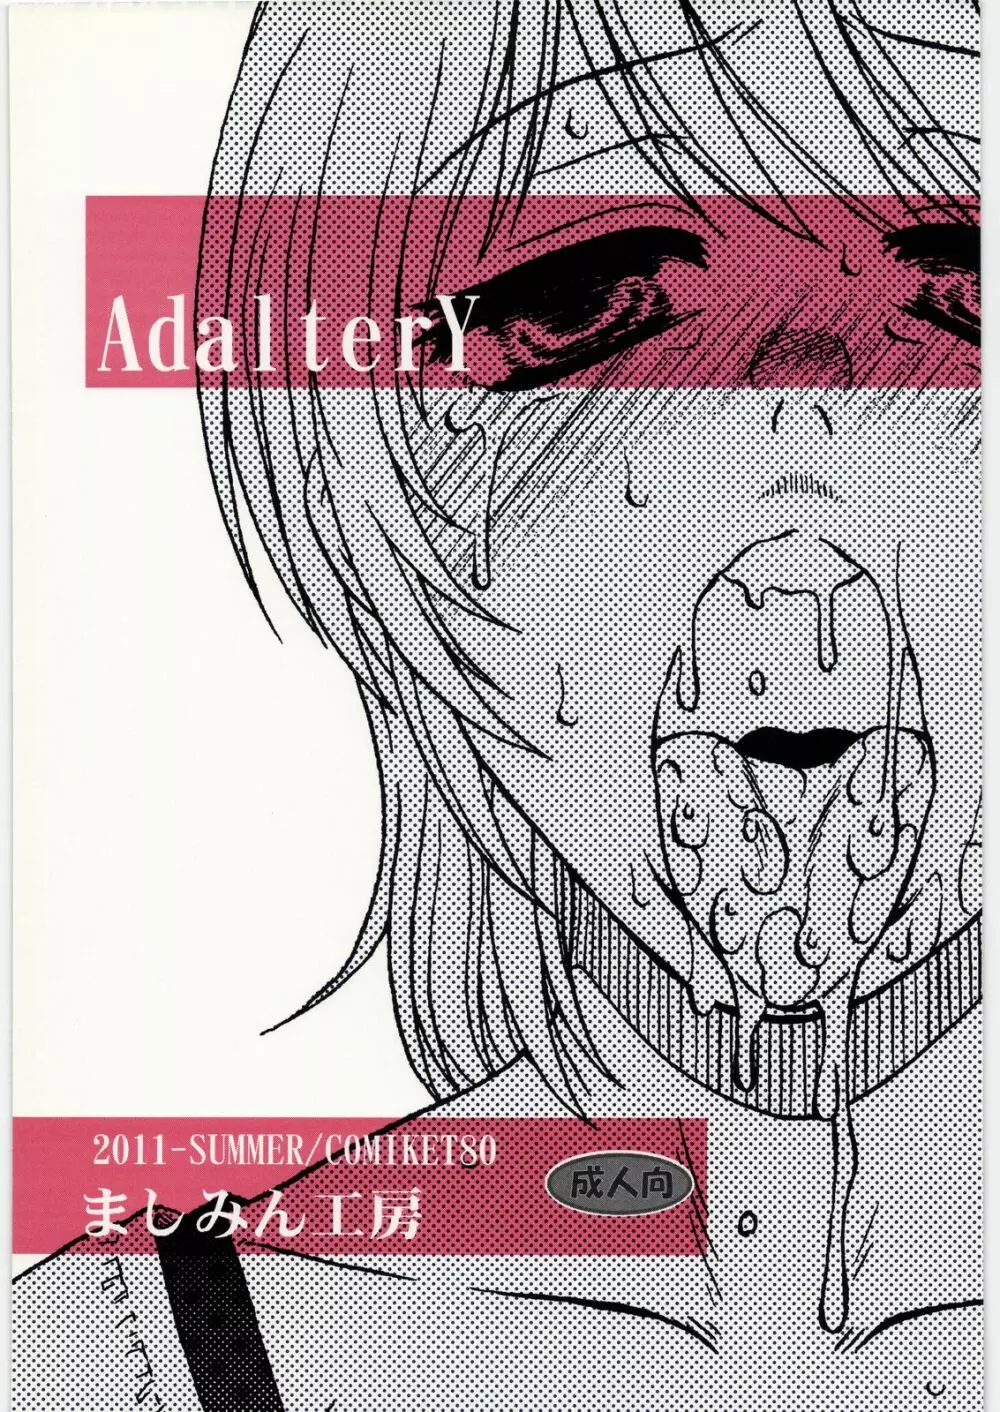 AdalterY 34ページ